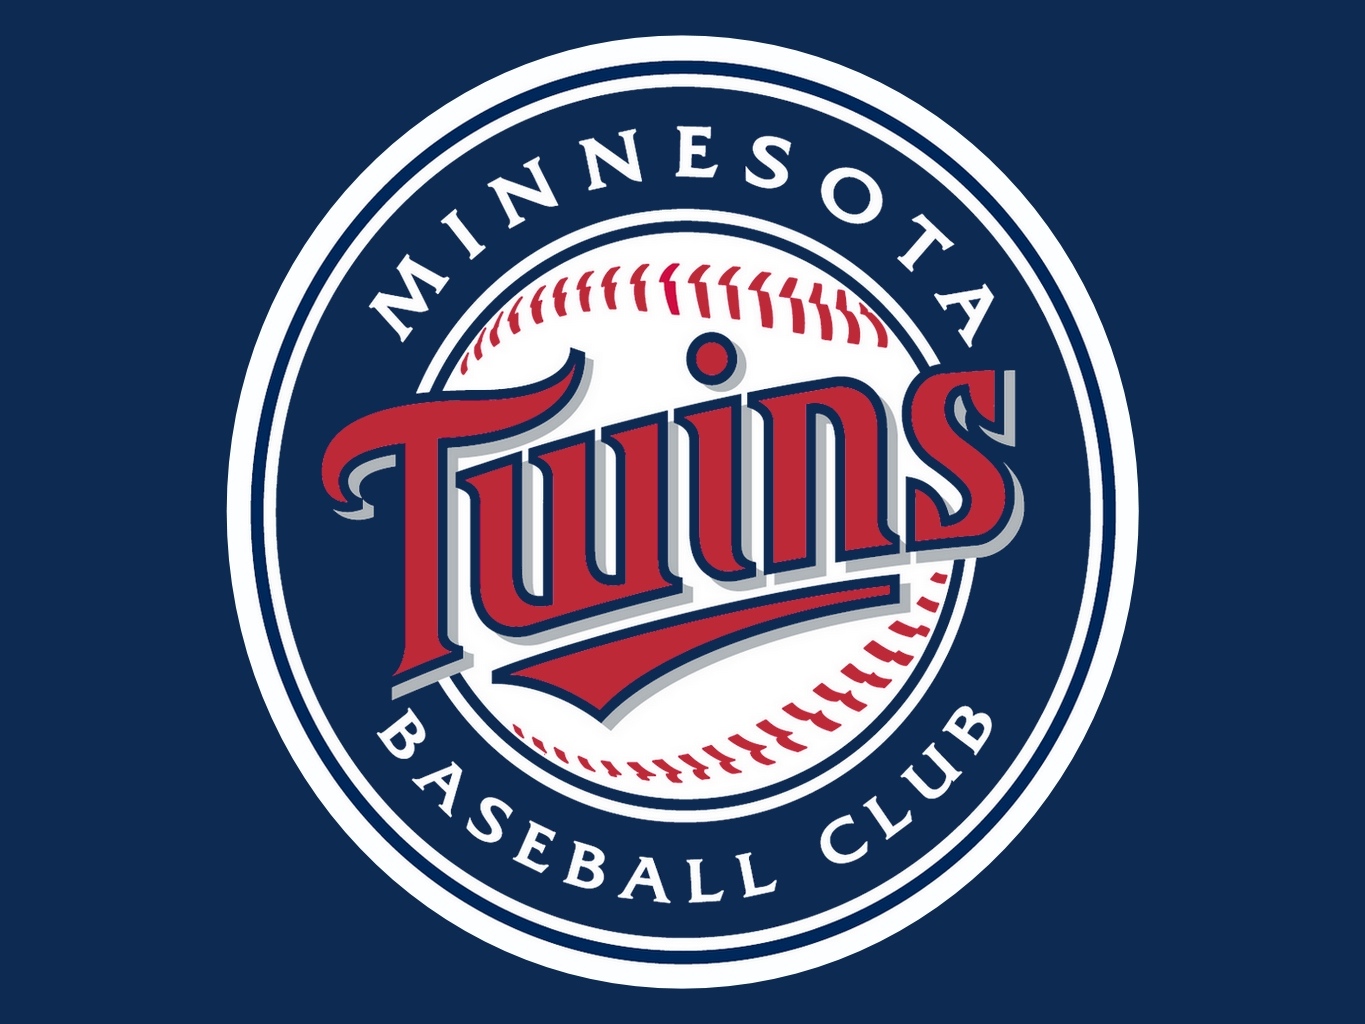 Minnesota Twins - Wikipedia